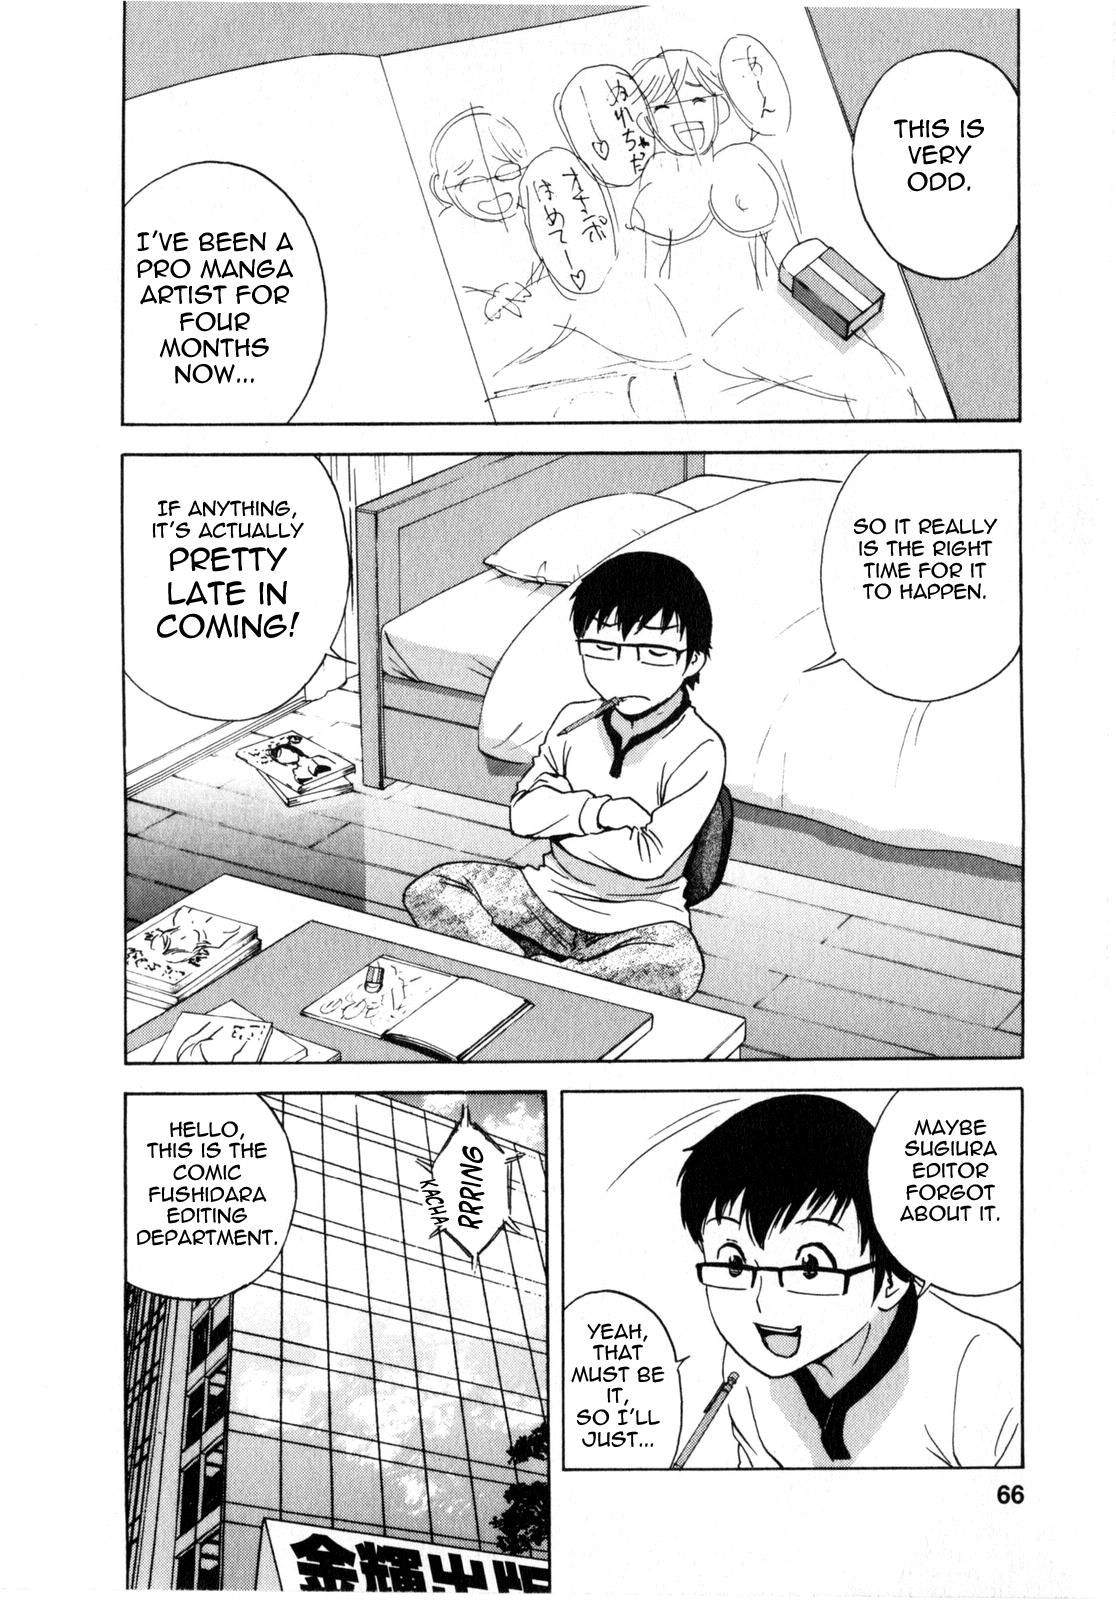 [Hidemaru] Life with Married Women Just Like a Manga 2 - Ch. 1-8 [English] {Tadanohito} 68